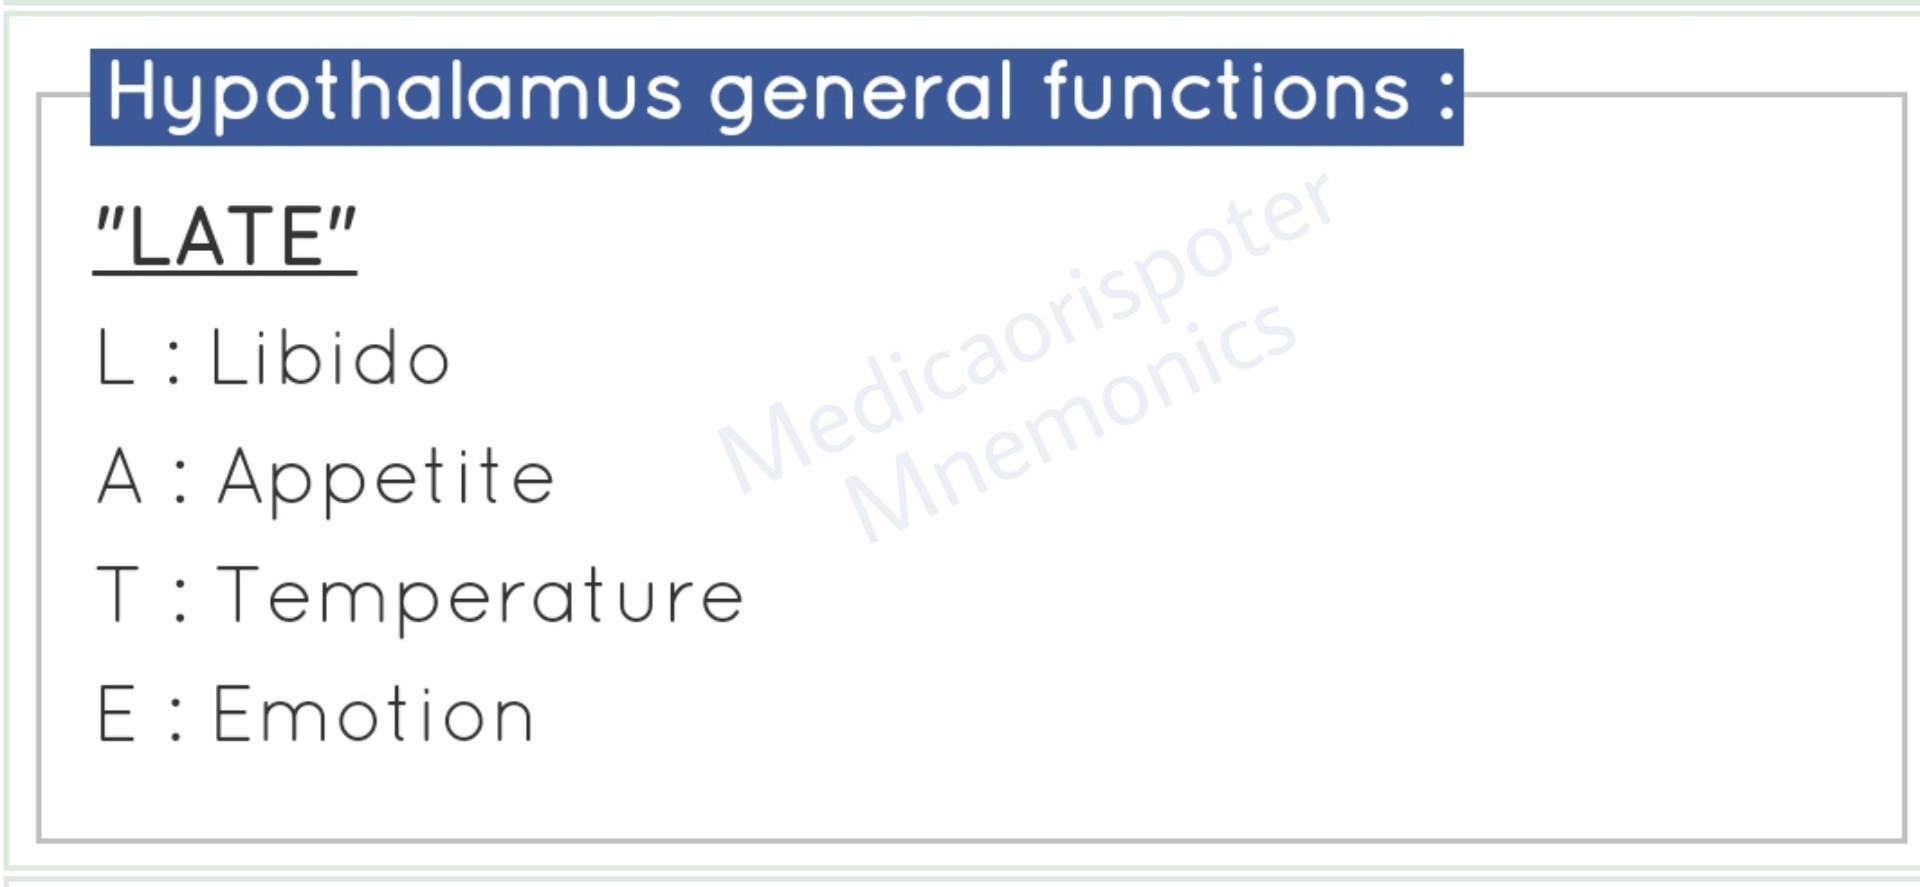 General Functions of Hypothalamus